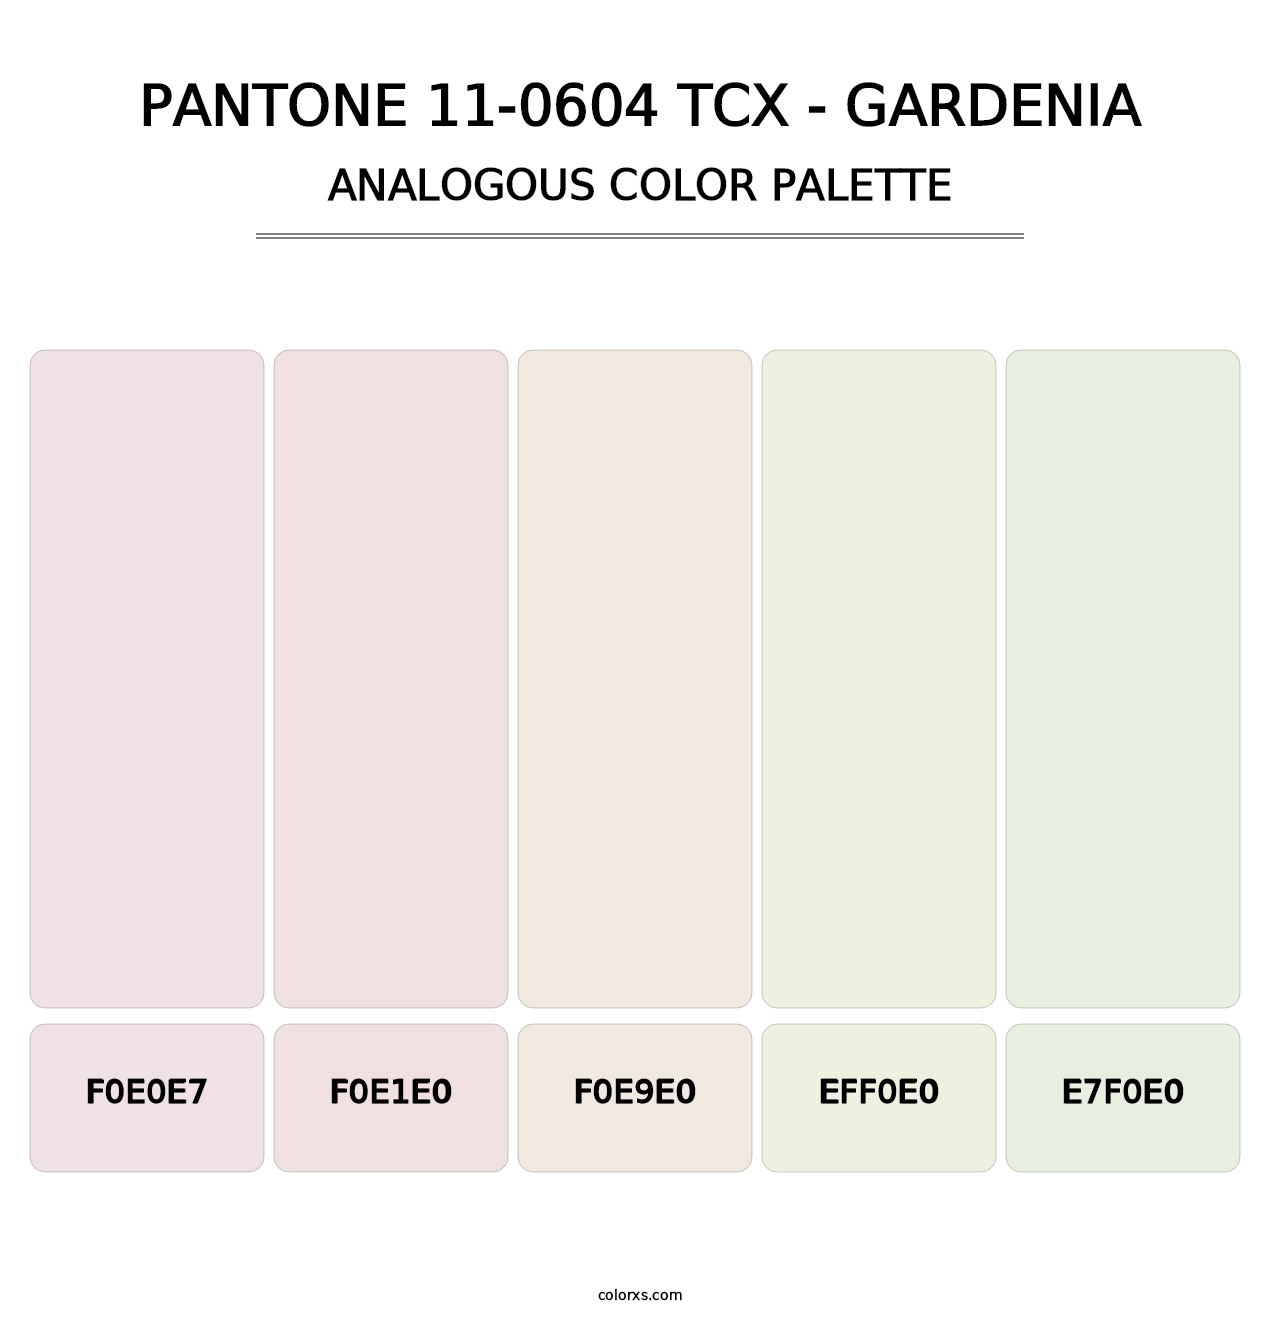 PANTONE 11-0604 TCX - Gardenia - Analogous Color Palette